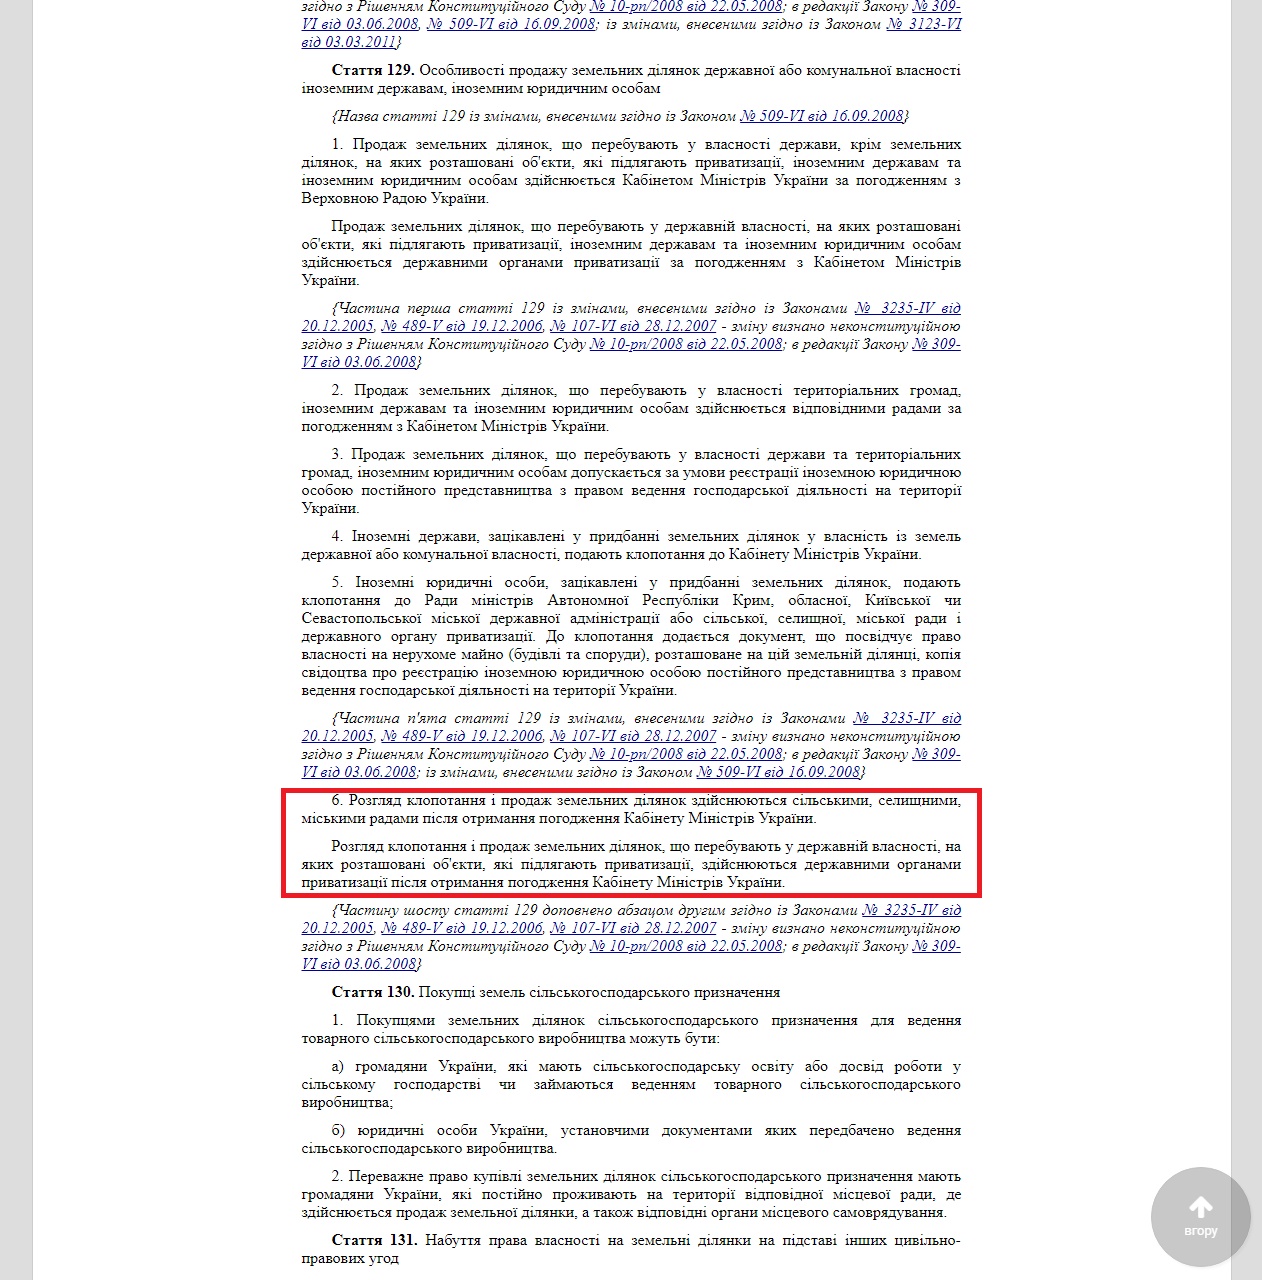 https://zakon.rada.gov.ua/laws/show/2768-14